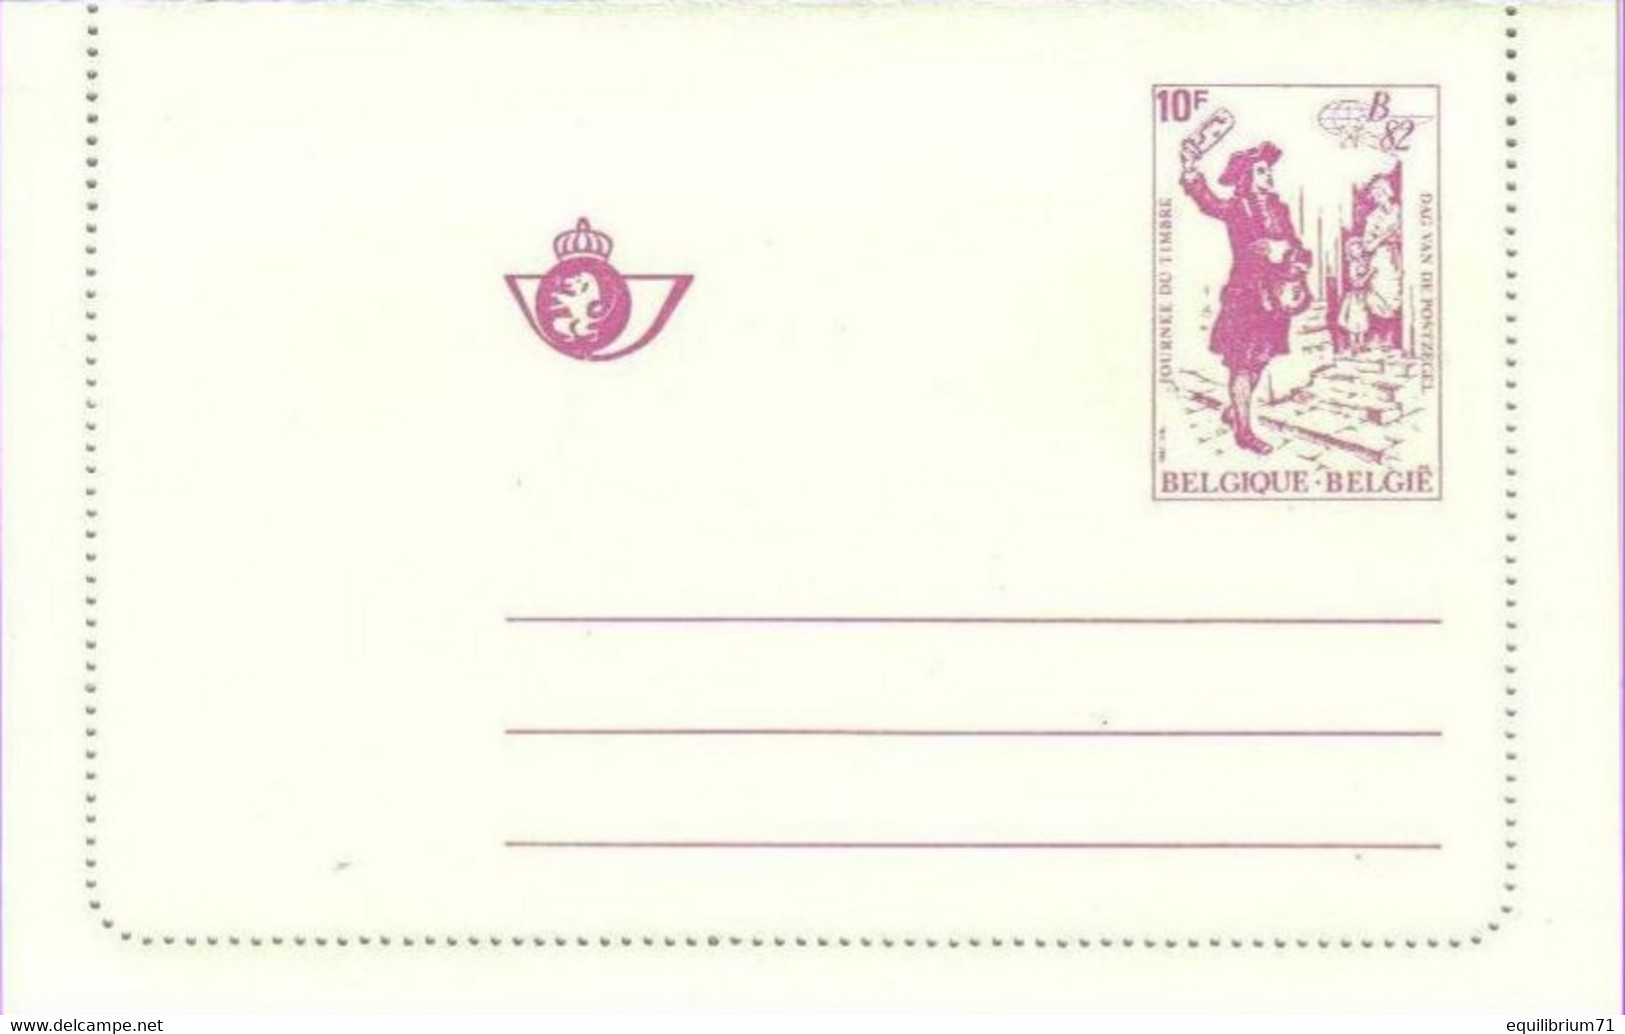 CL / KB 49 - 10fr - Carte-Lettre / Kaartbrief - 1982 - NEUF / NIEUW - Postbladen